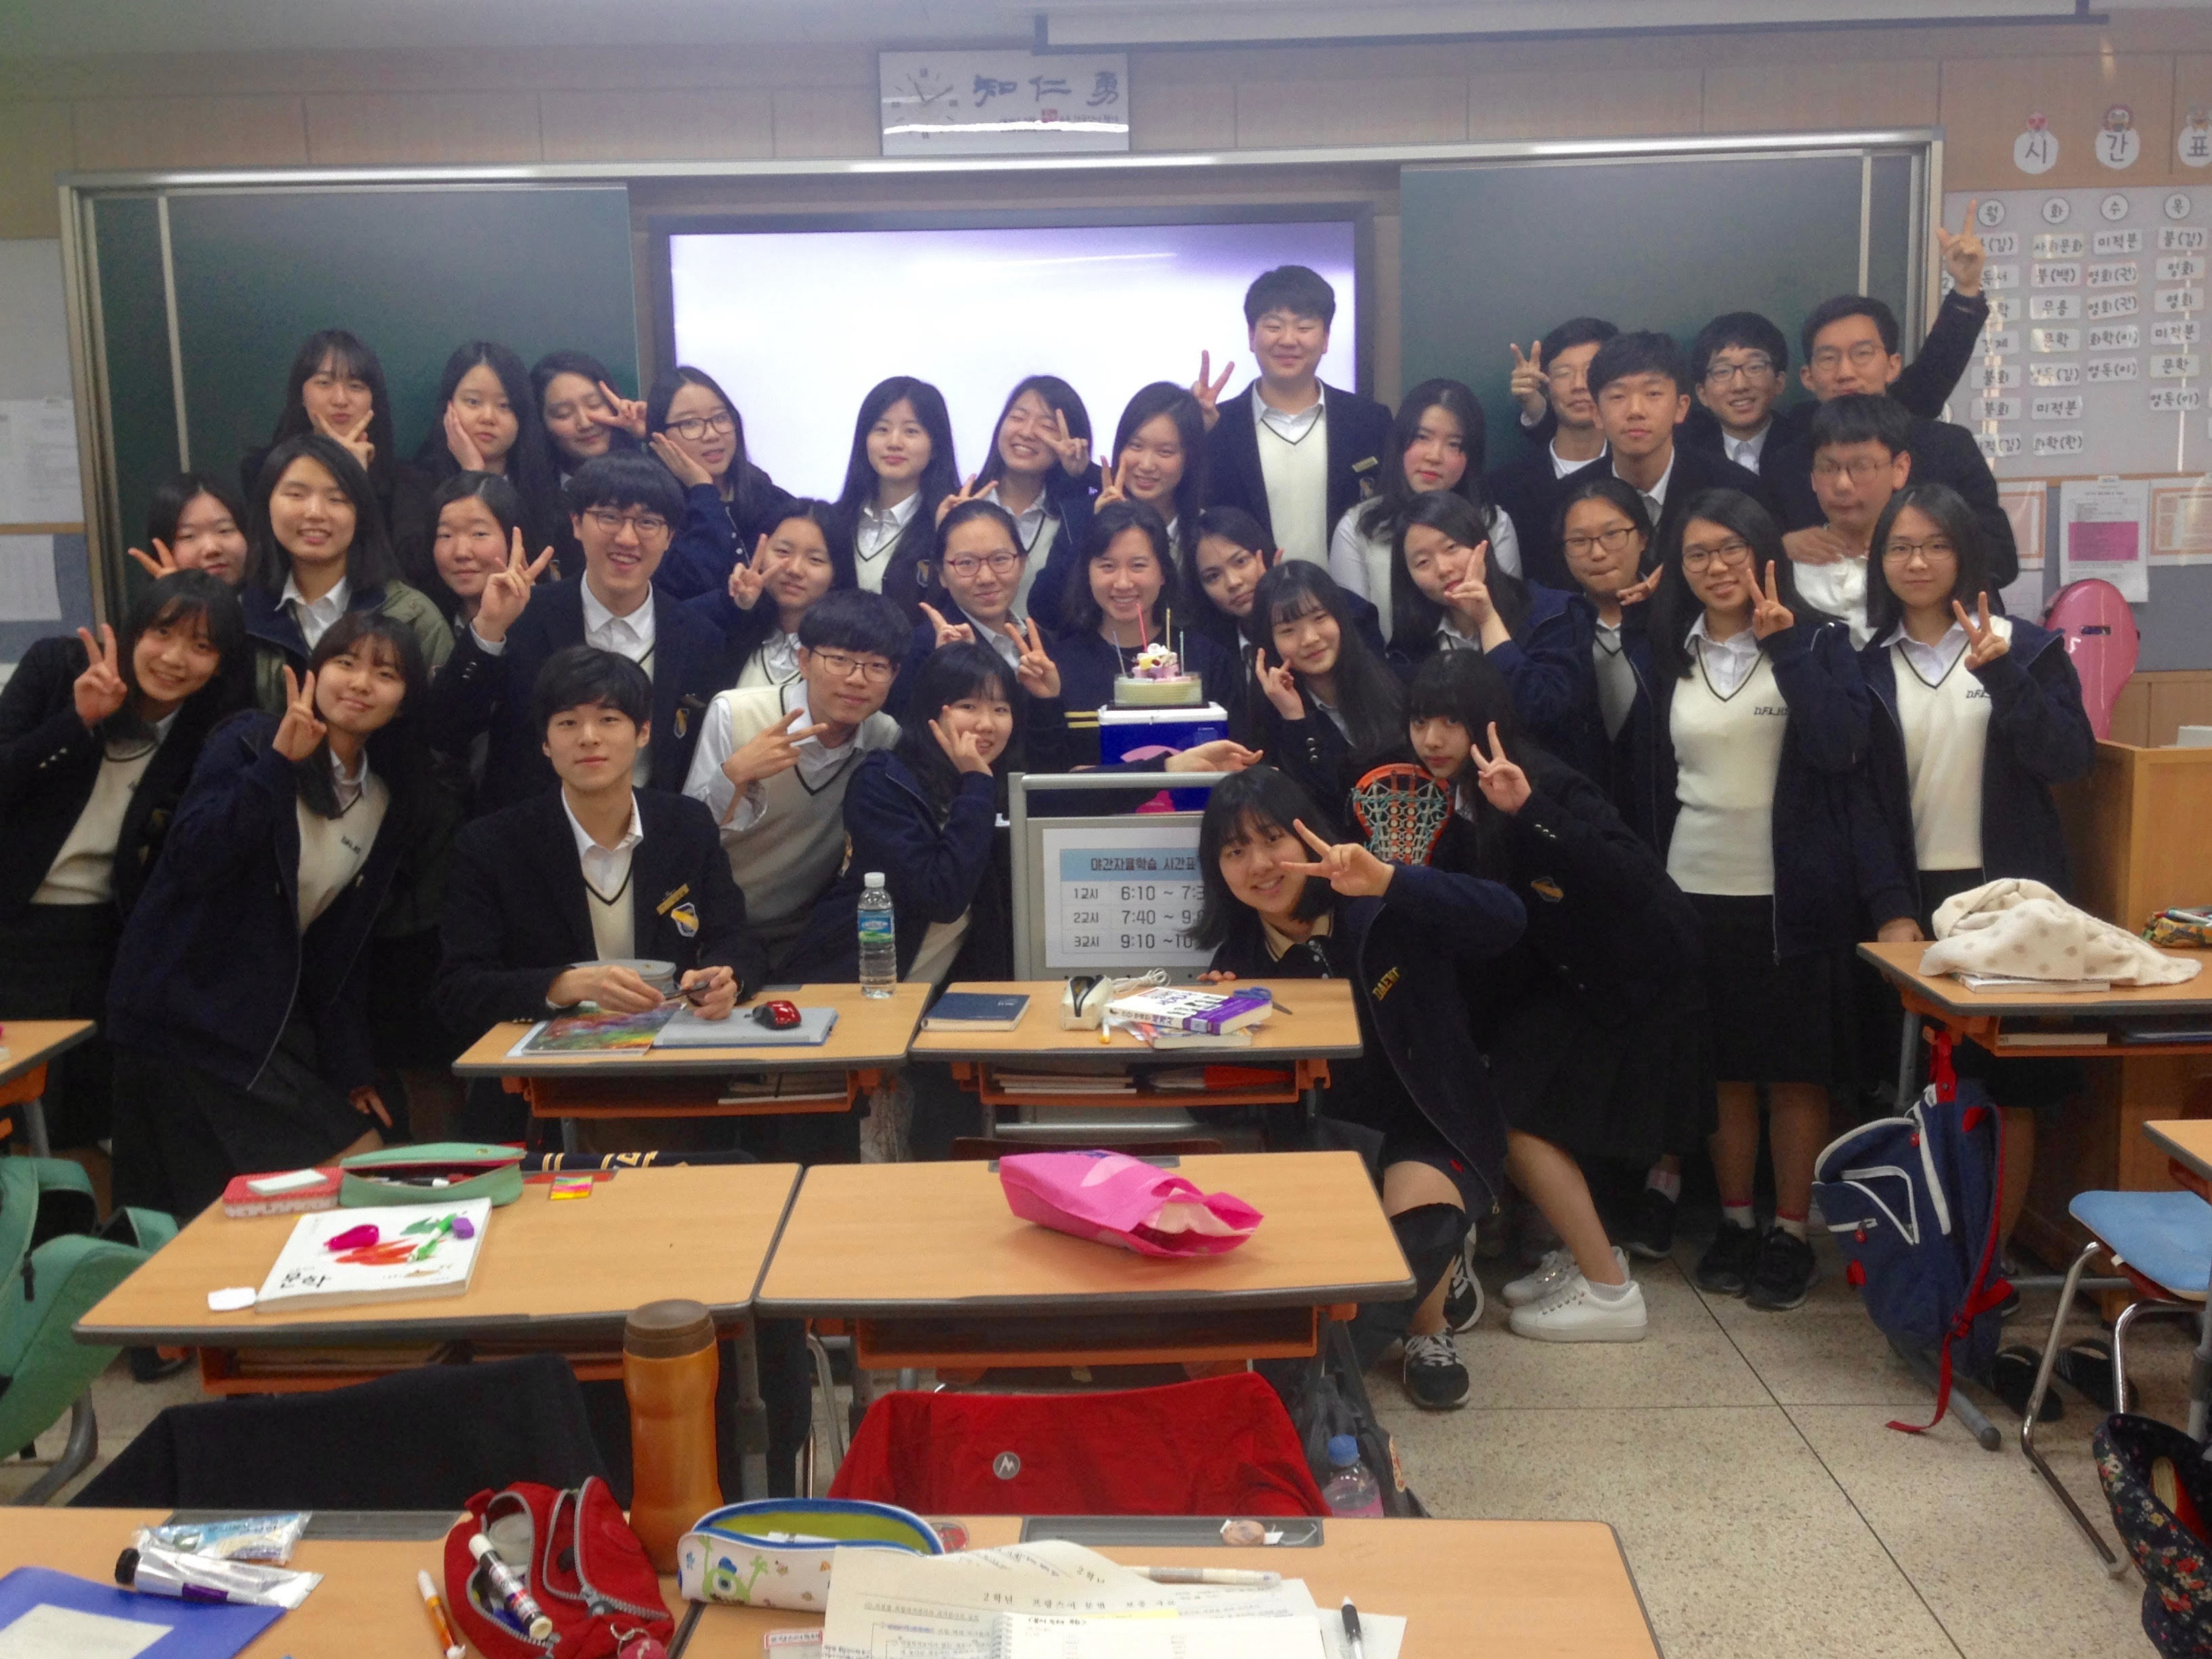 Alexi Birthday Party At Host School In Korea